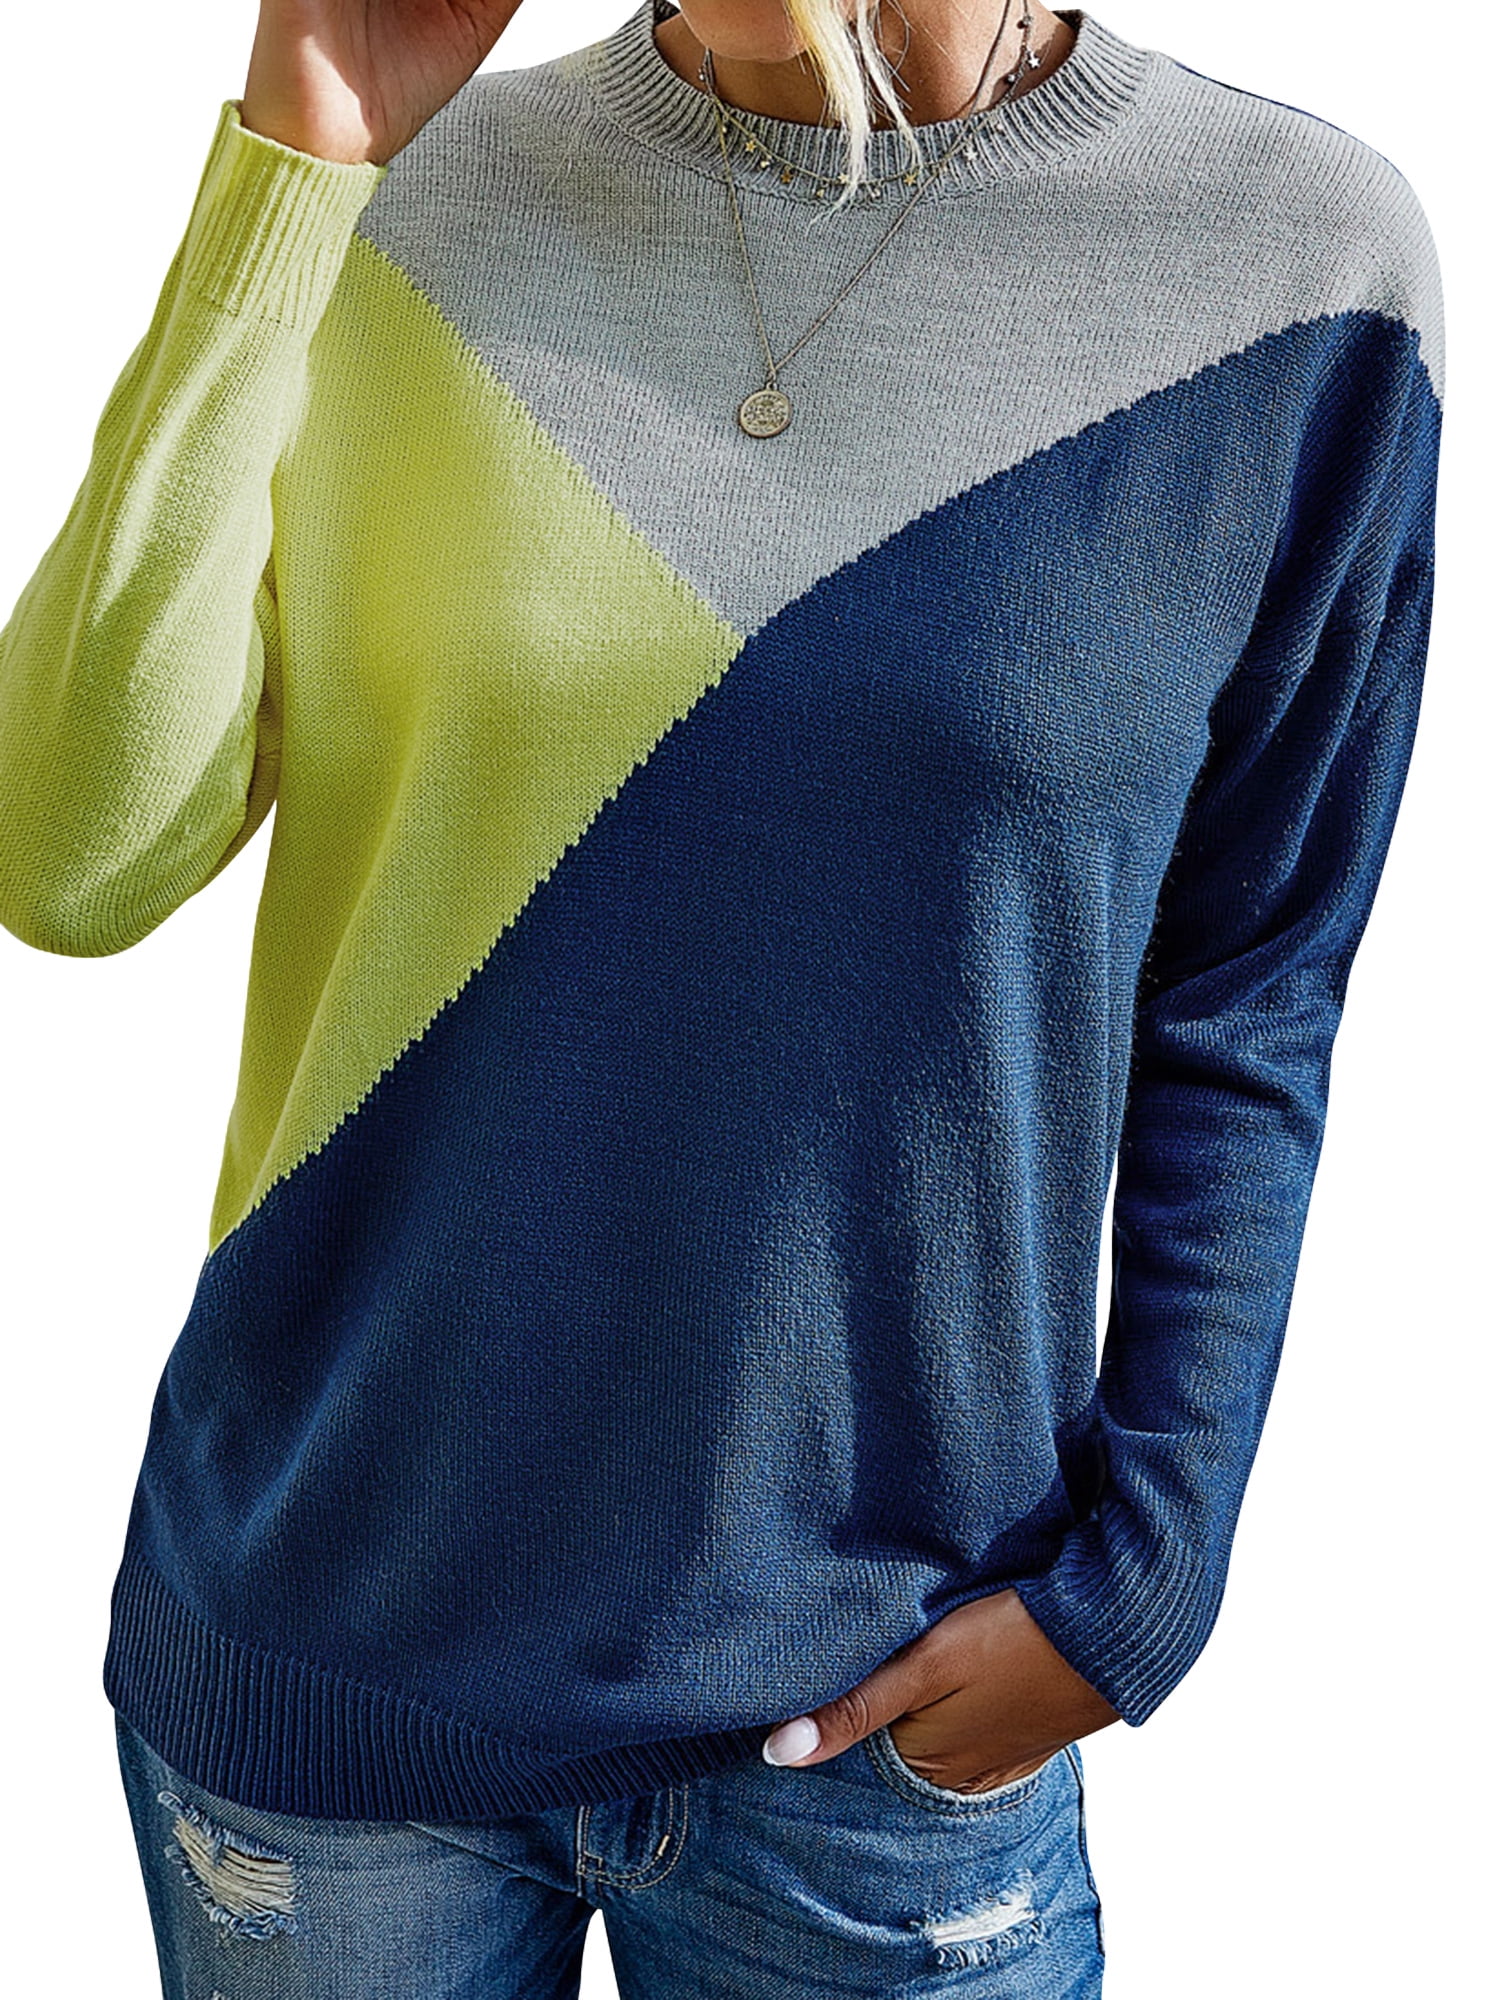 Fashionhe Rainbow Patchwork O Neck Sweatshirt Women Casual Blouse Pullover Tops